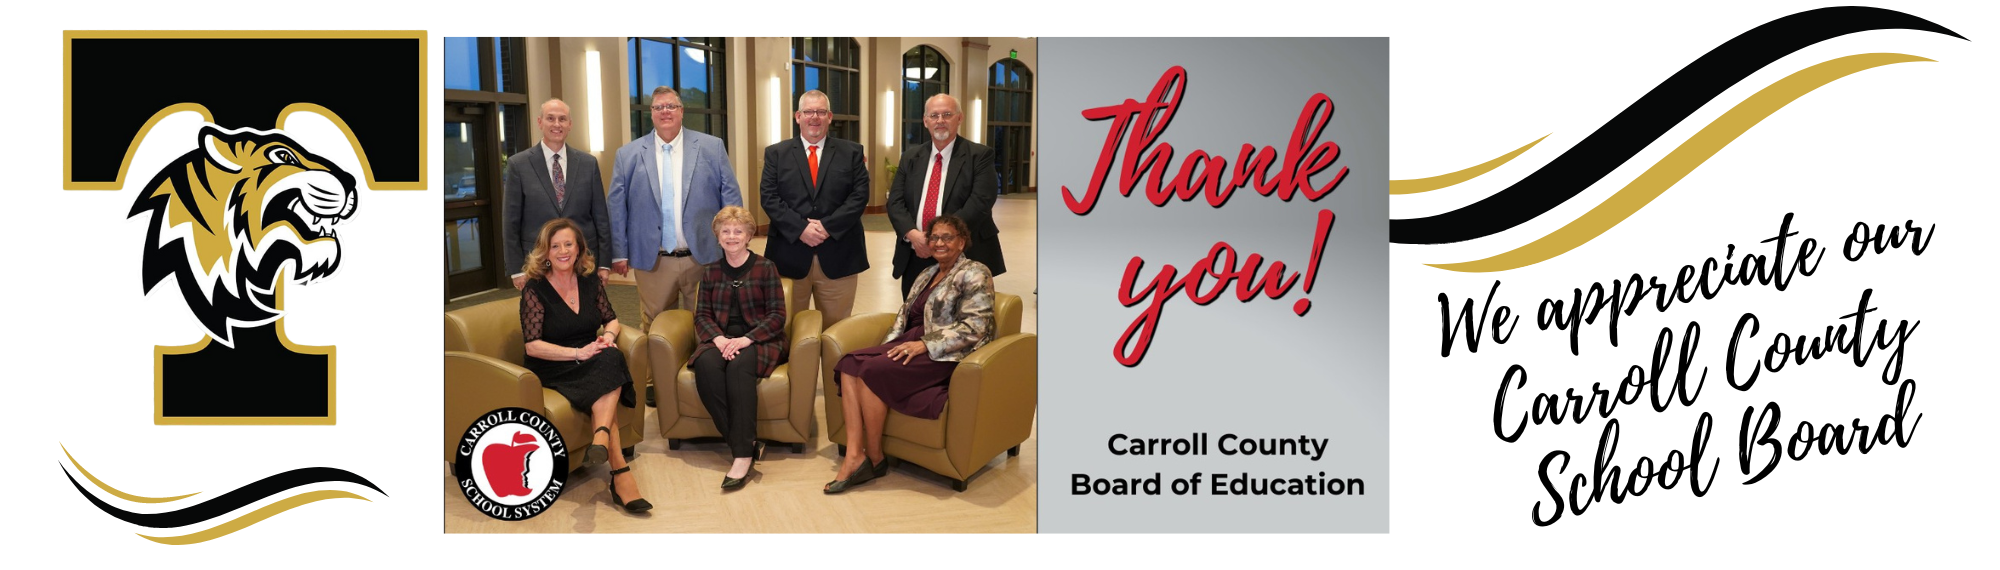 We Appreciate our Carroll County School Board